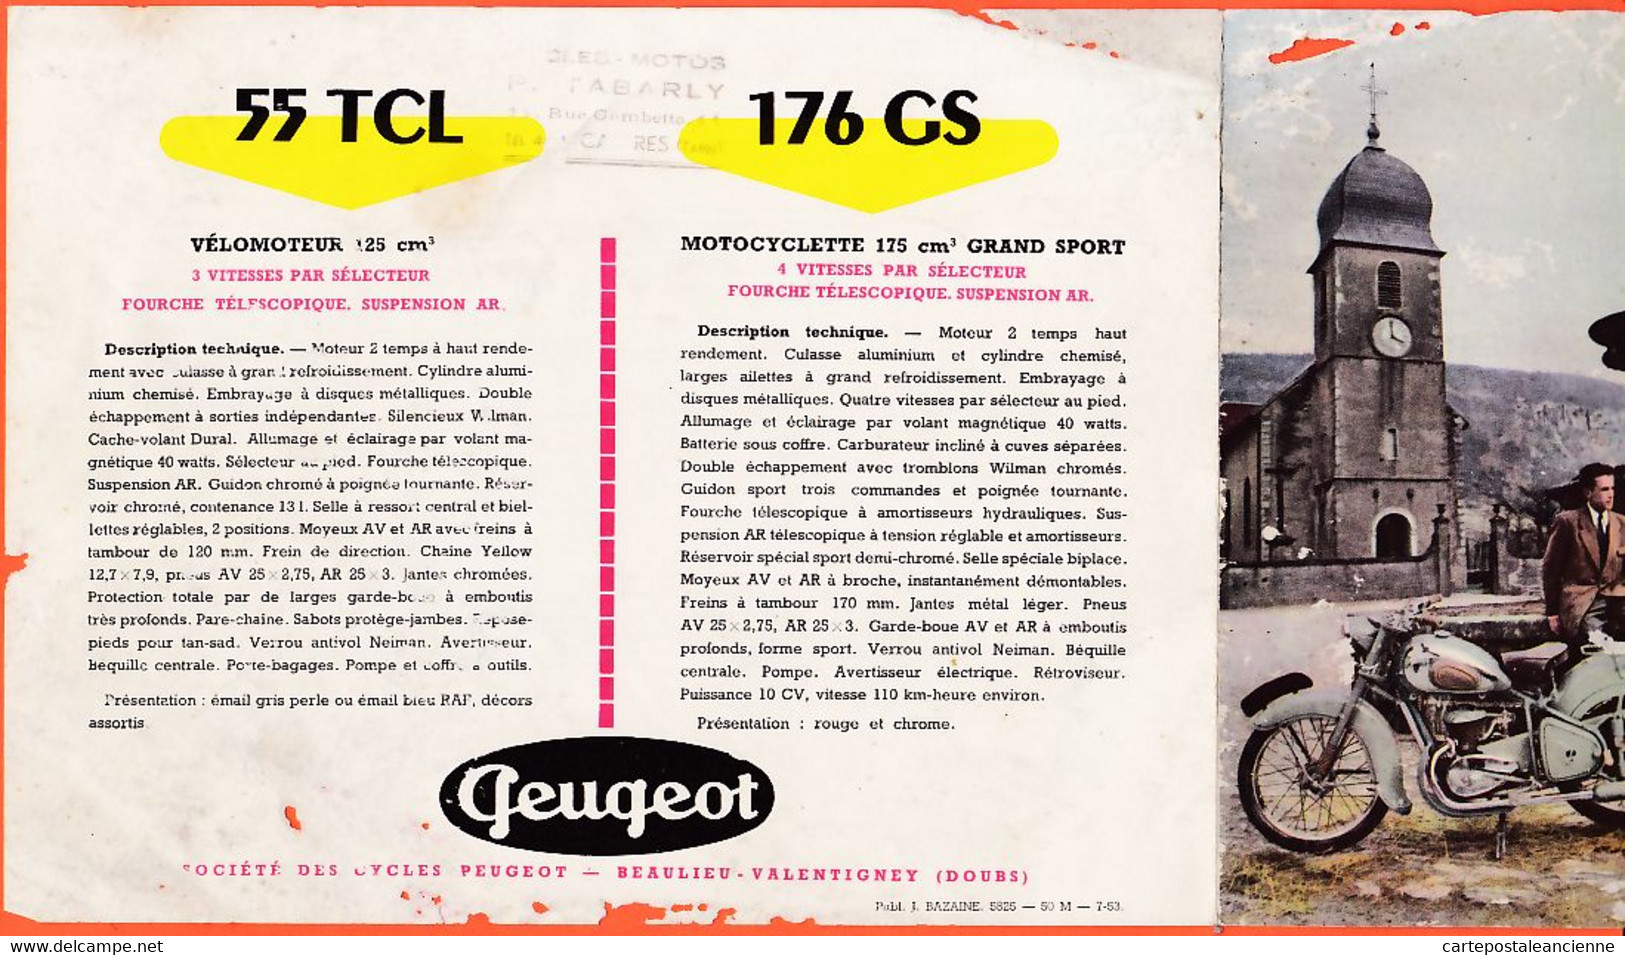 VEN233 ♥️ CASTRES Tarn TABARLY Cycles-Moto Rue GAMBETTA Dépliant Publicitaire 1953-54 Motocyclette PEUGEOT 55 TCL 176 GS - Pubblicitari